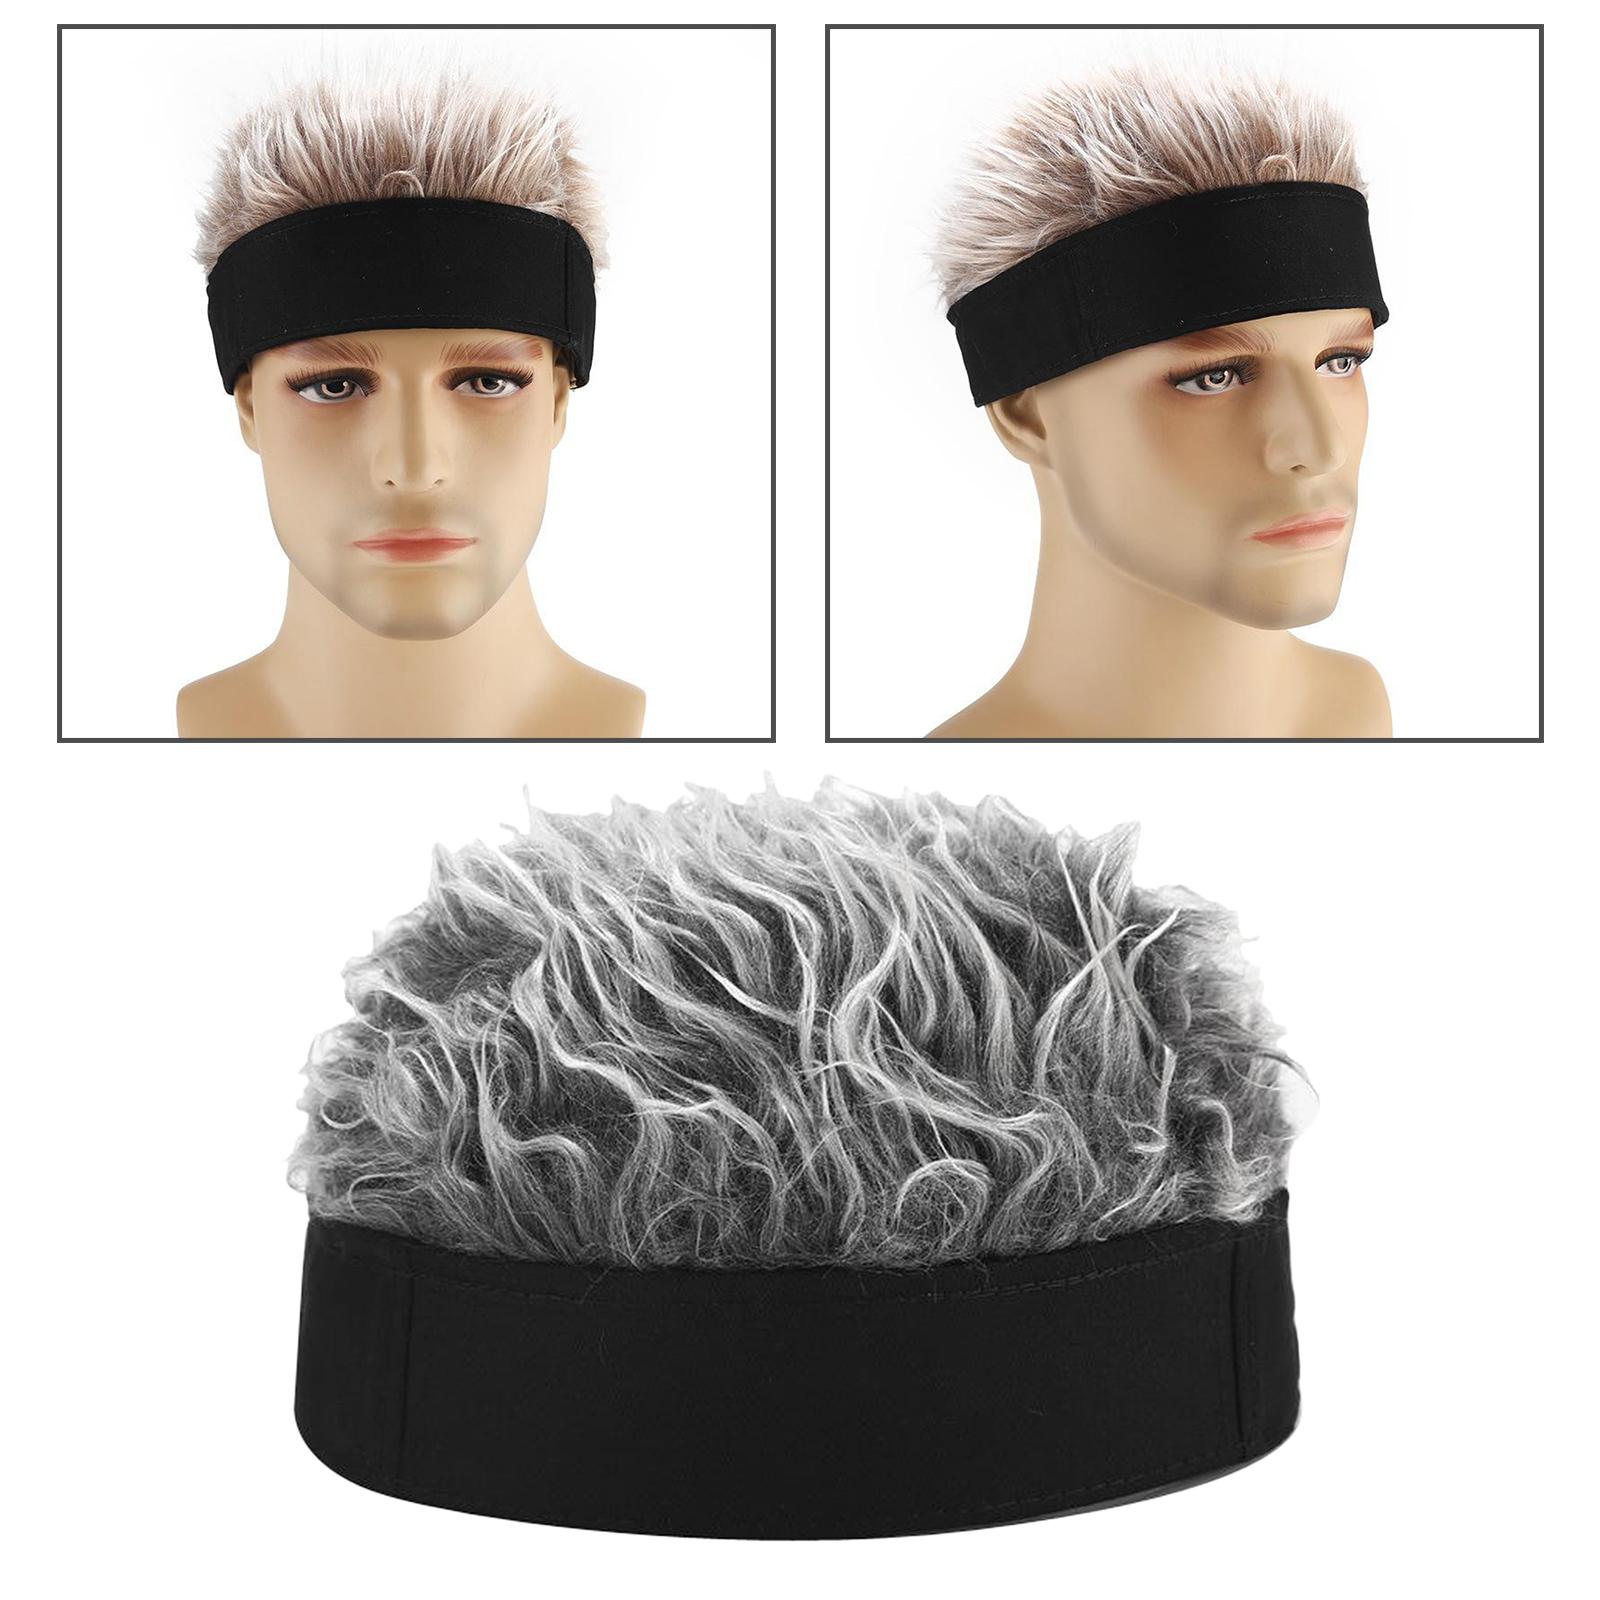 Unisex Beanie Hat with Fake Hair Fashion Wig Brimless Hat Black Gray